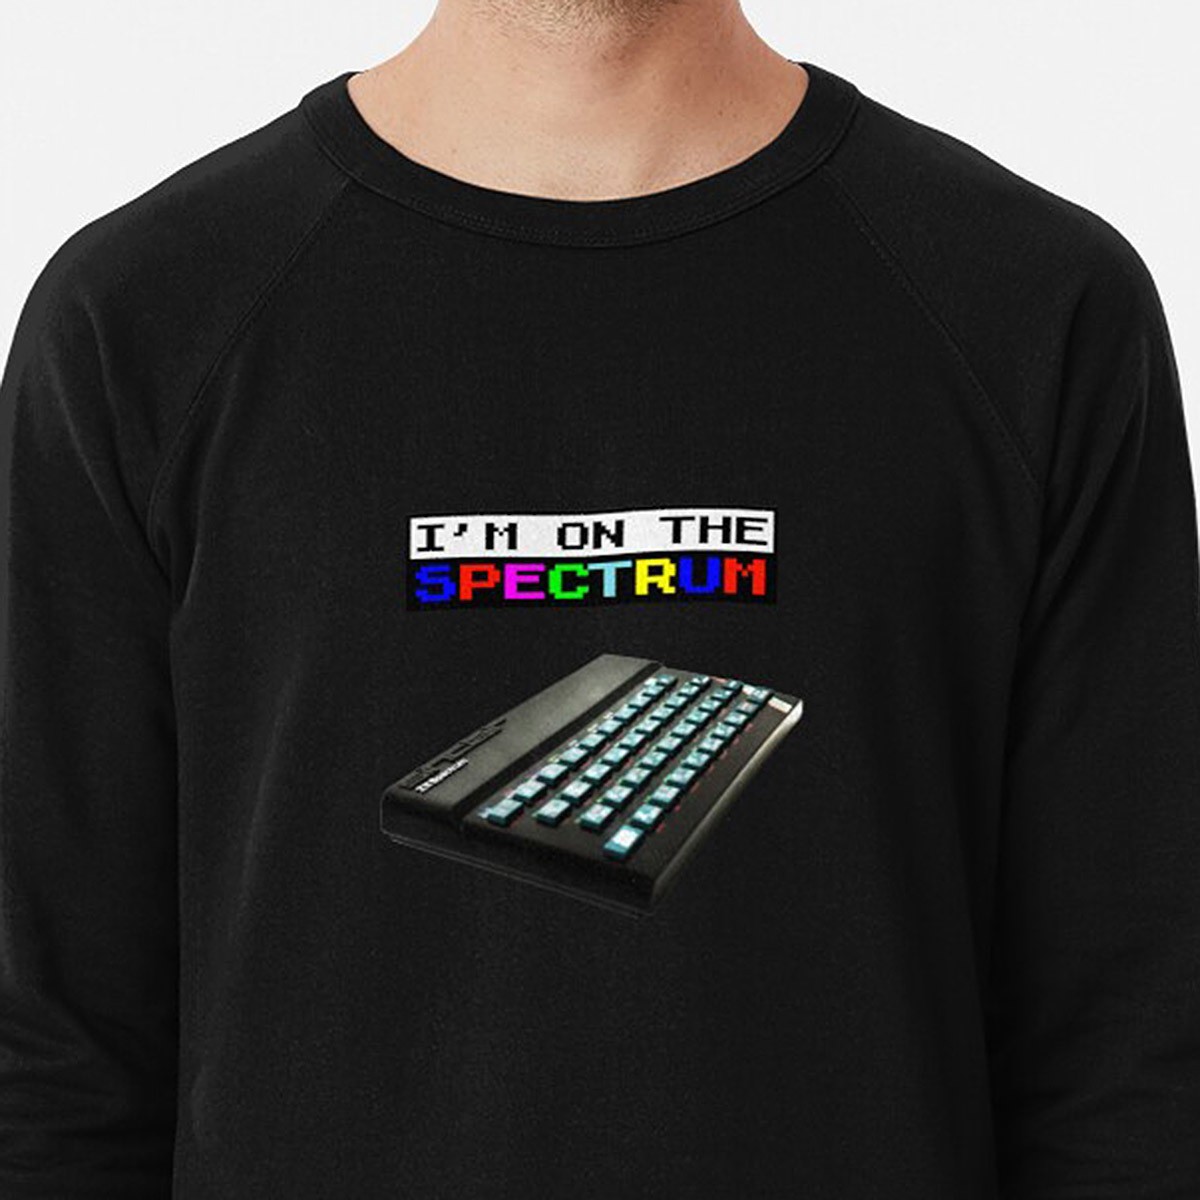 I'm on the Spectrum! - Lightweight Sweatshirt - 